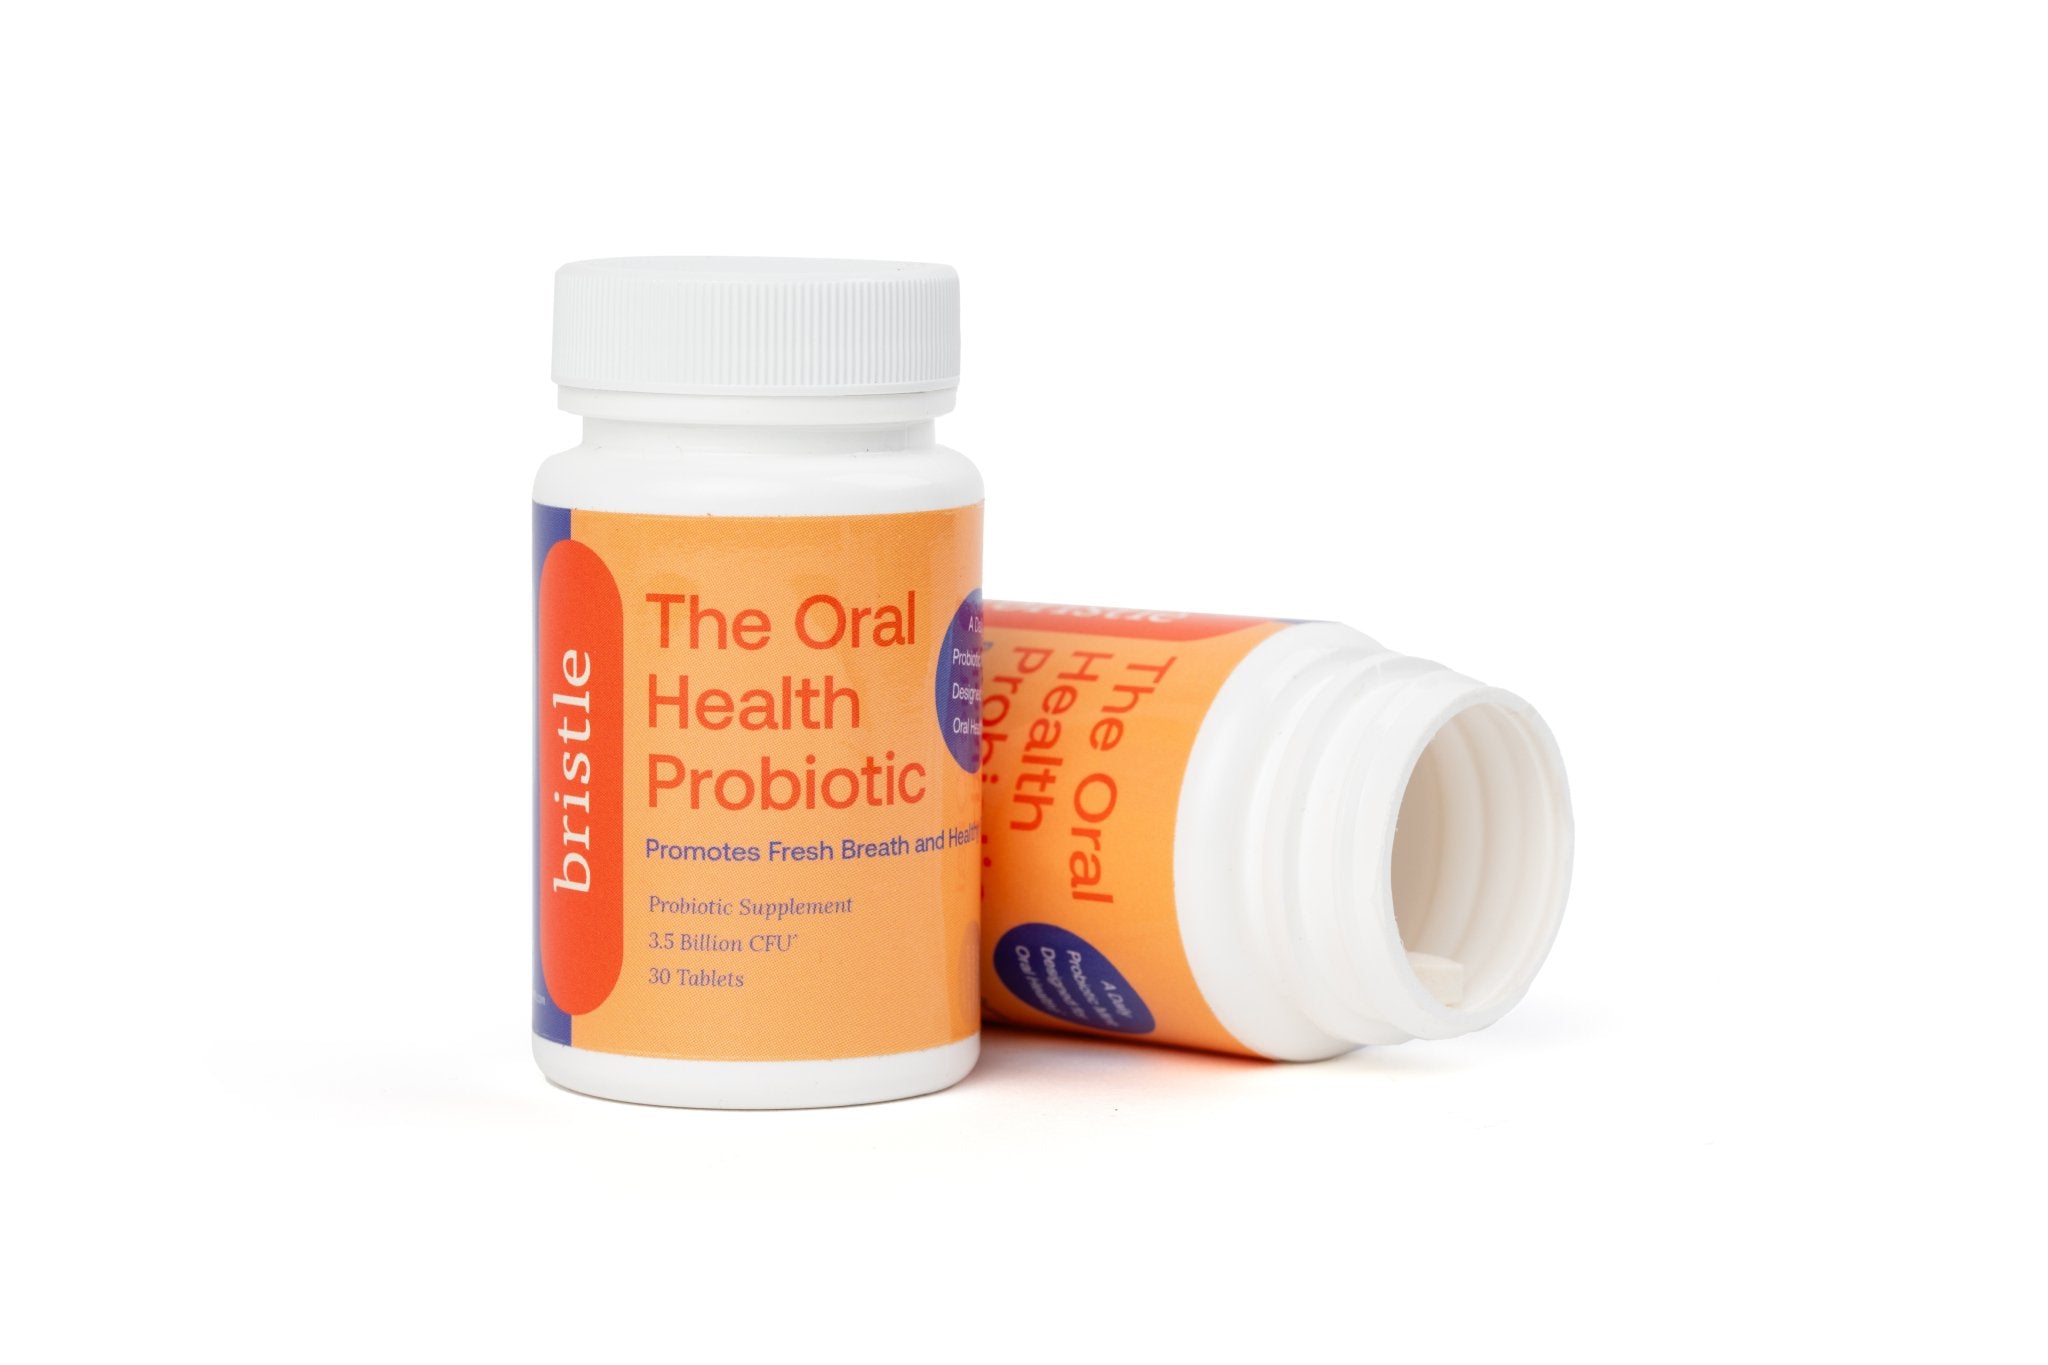 Bristle Health The Oral Health Probiotic